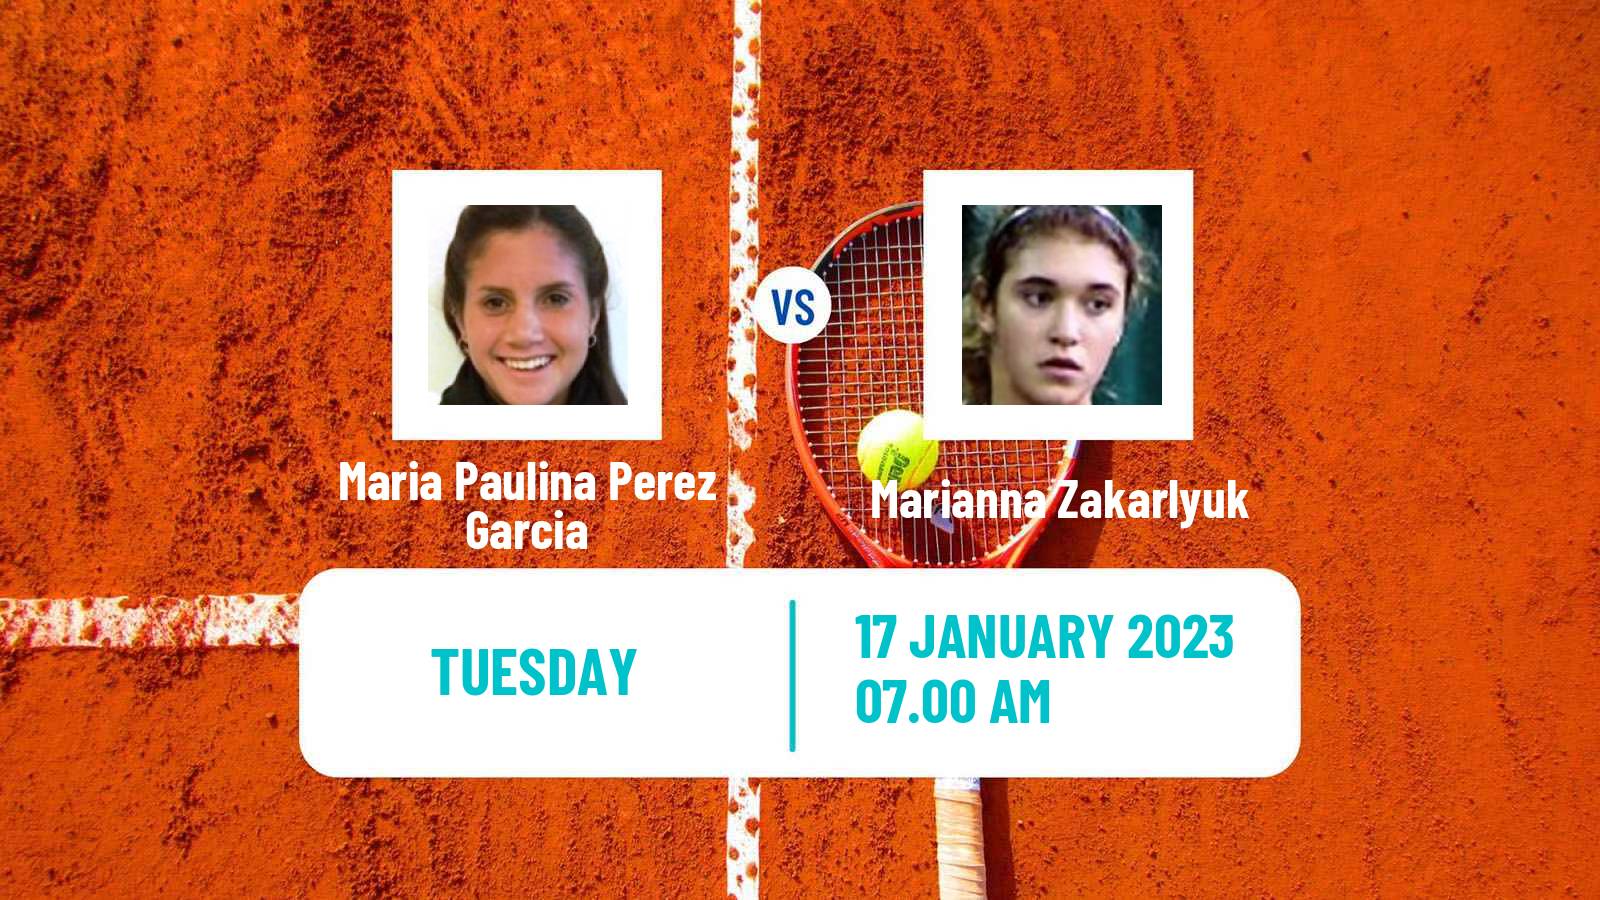 Tennis ITF Tournaments Maria Paulina Perez Garcia - Marianna Zakarlyuk